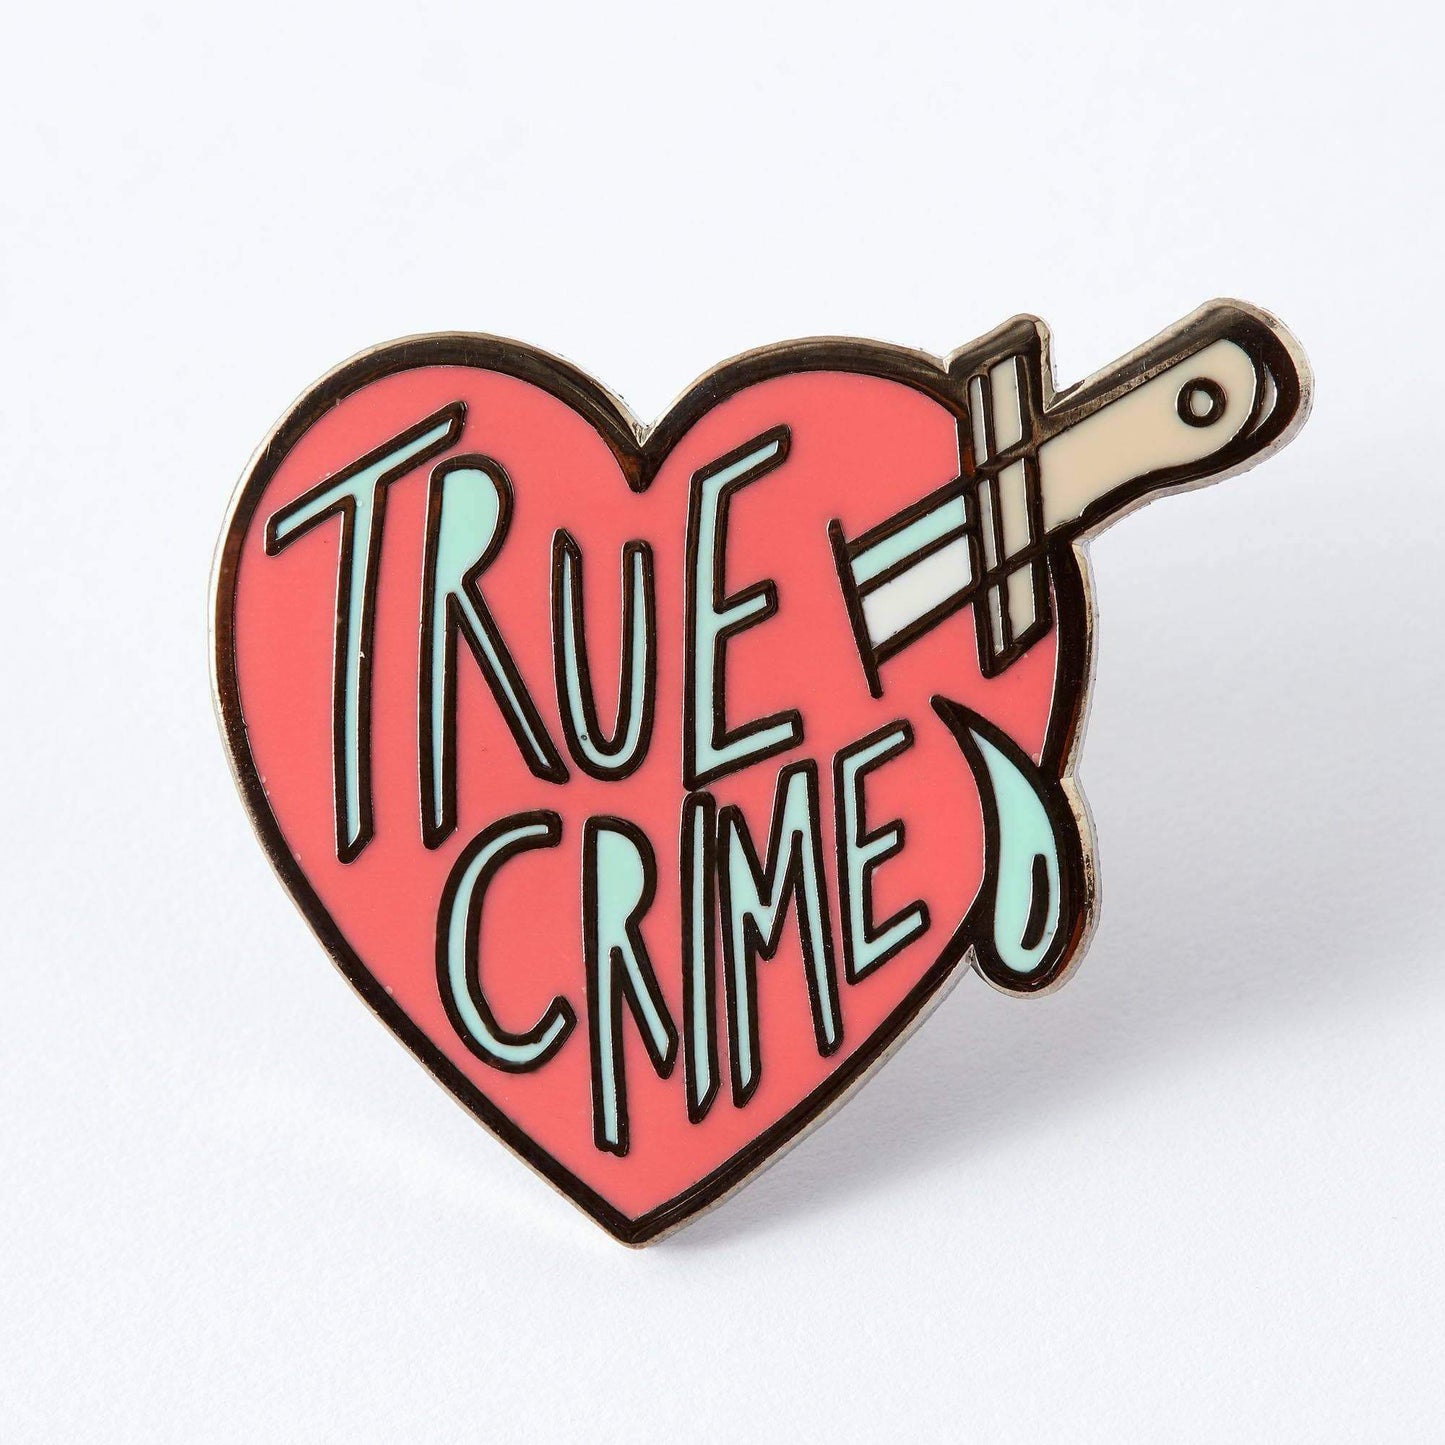 True Crime Enamel Pin